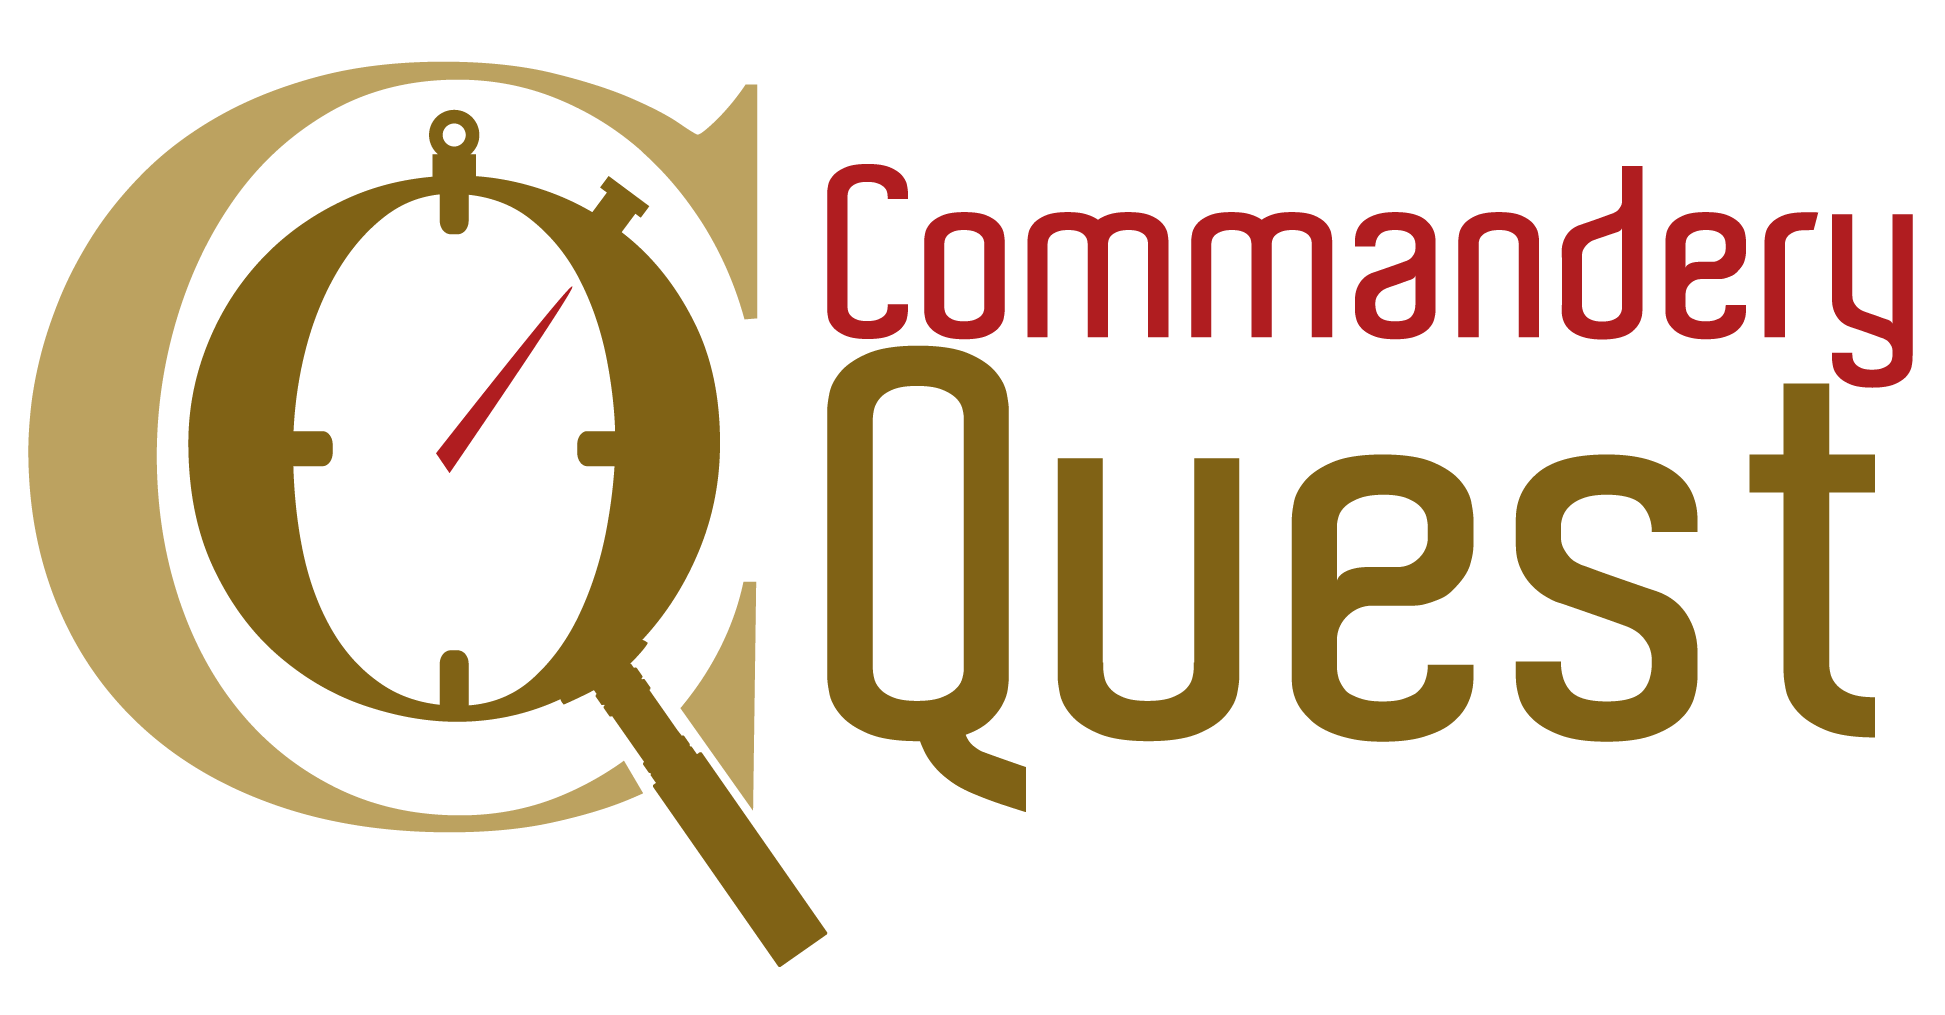 Commandery Quest logo